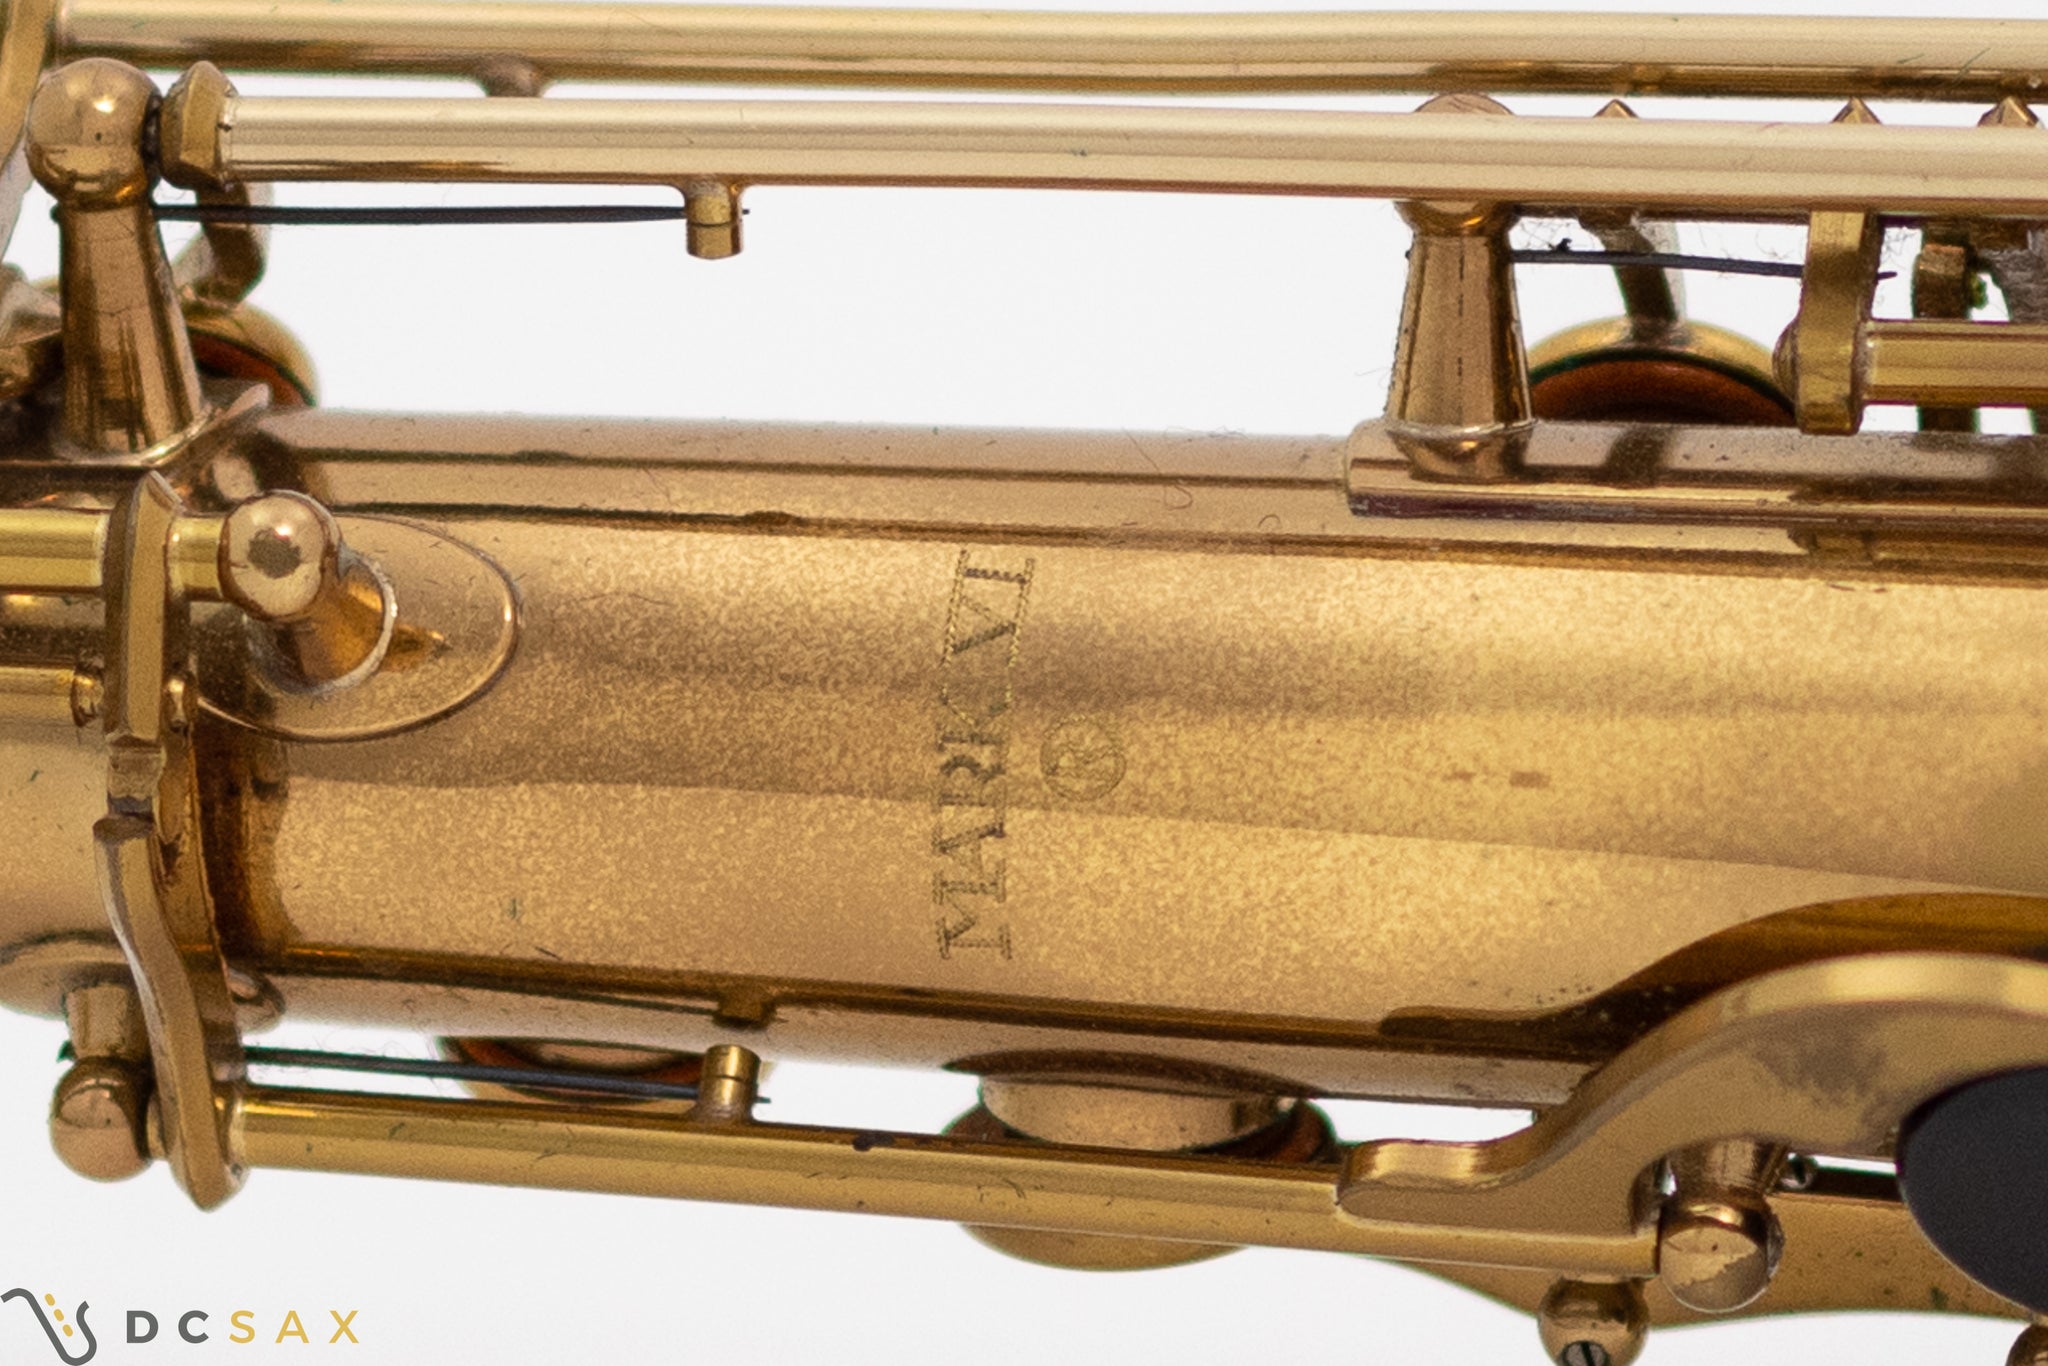 86,xxx Selmer Mark VI Tenor Saxophone, Near Mint, 99%+ Original Lacquer, Brecker S/N